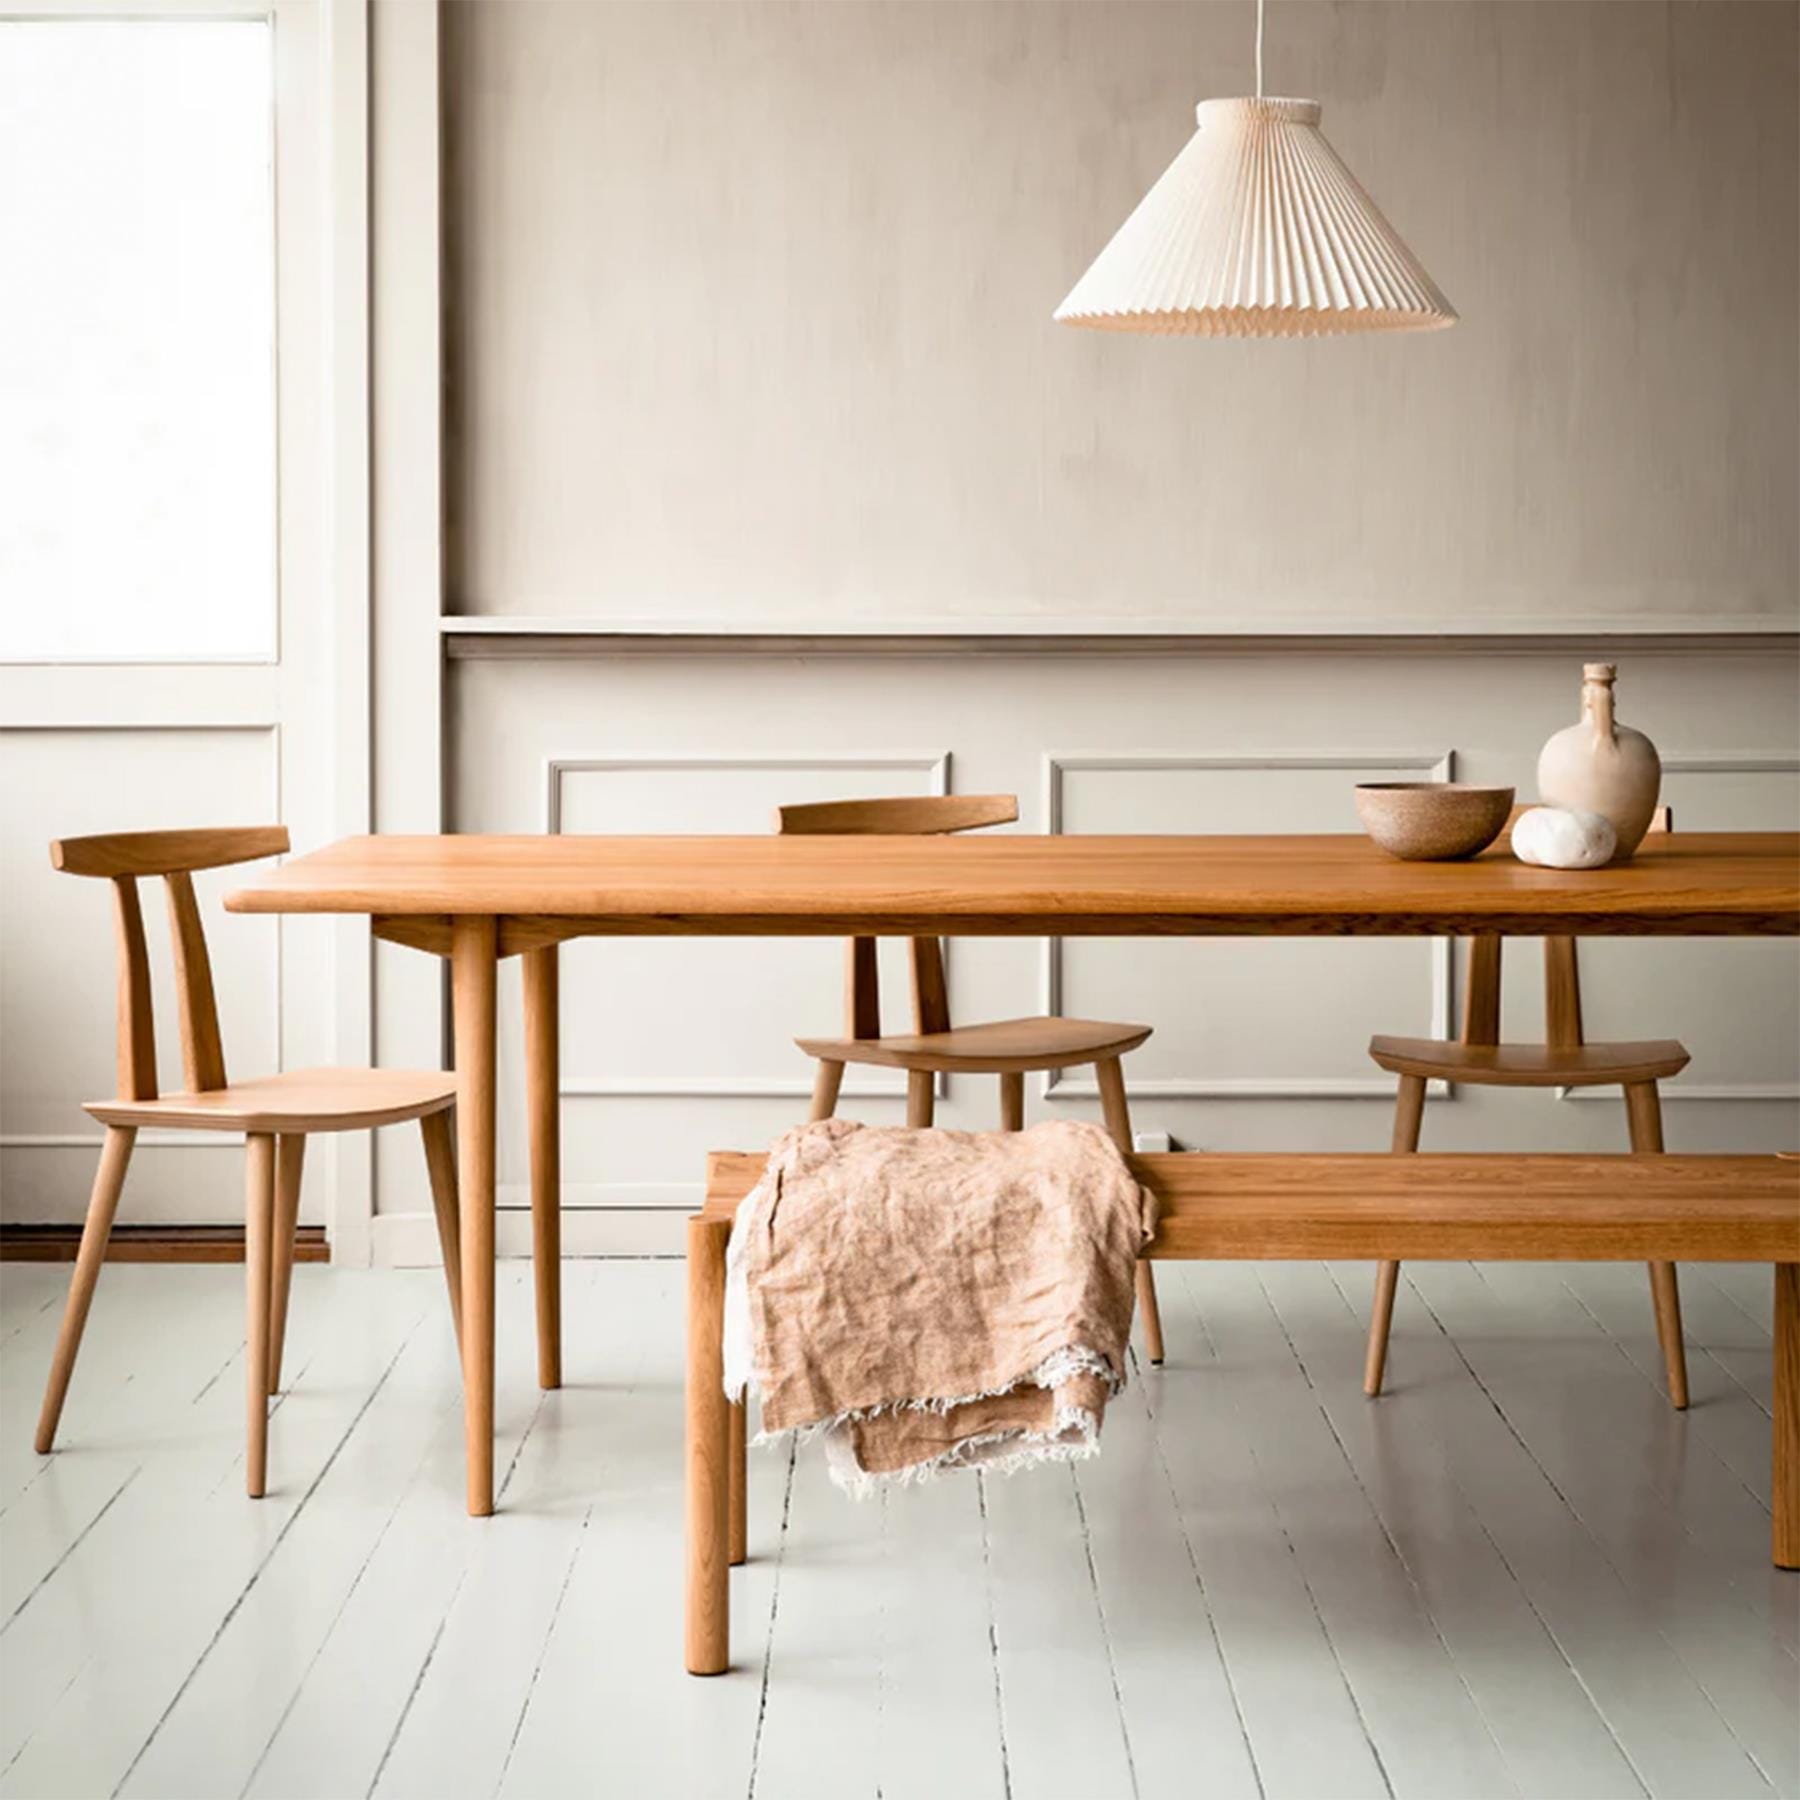 Make Nordic Holmen Rectangular Dining Table Large Natural Oak Length 280cm Width 112cm Without Extra Leaves Light Wood Designer Furniture Fro